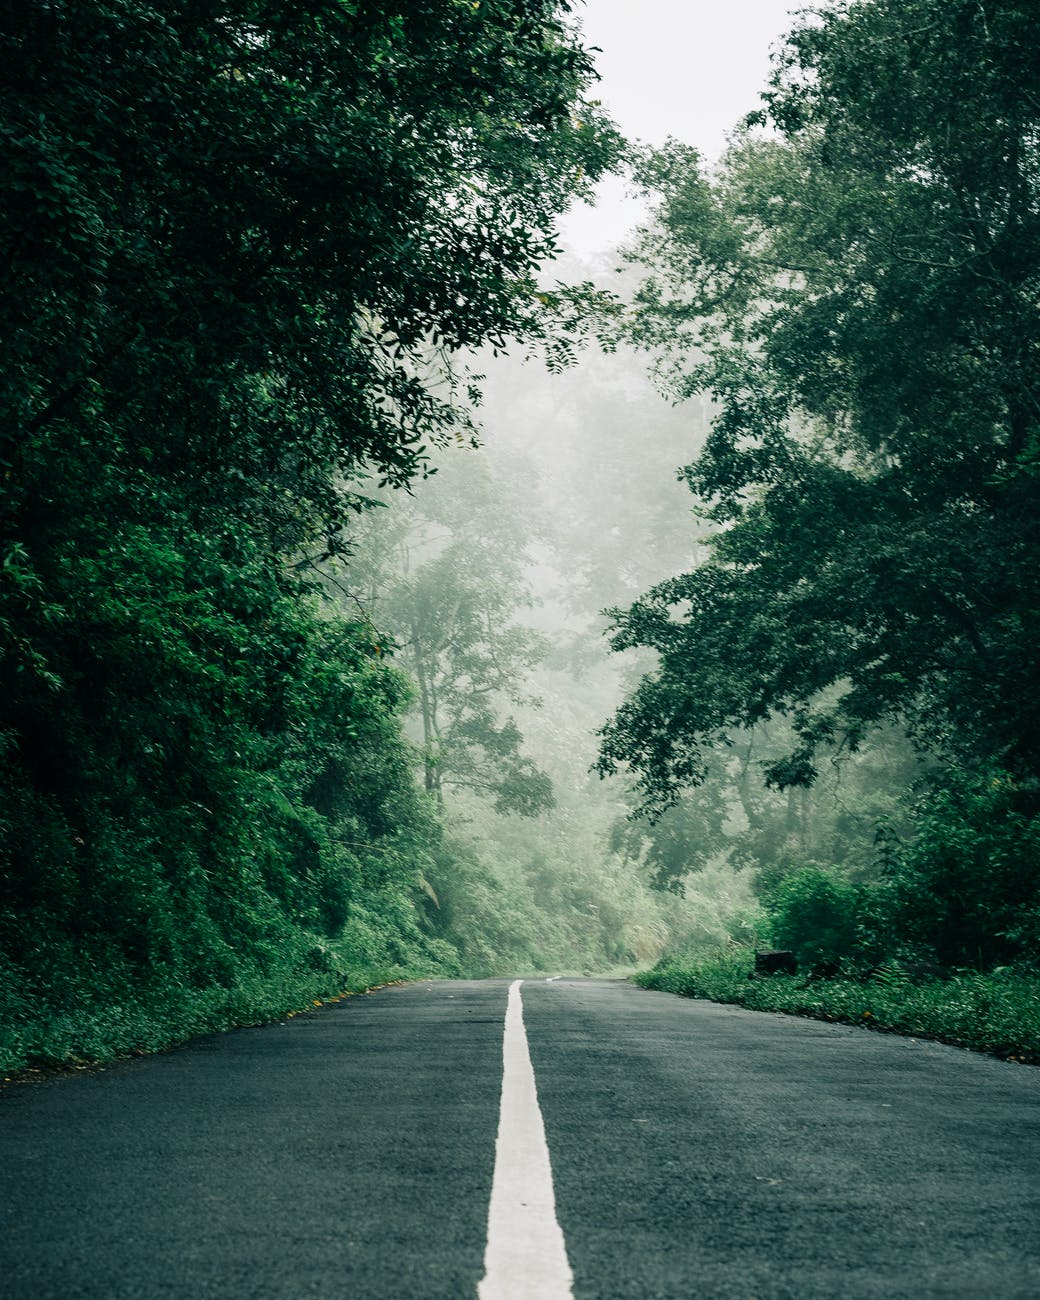 empty asphalt road between trees